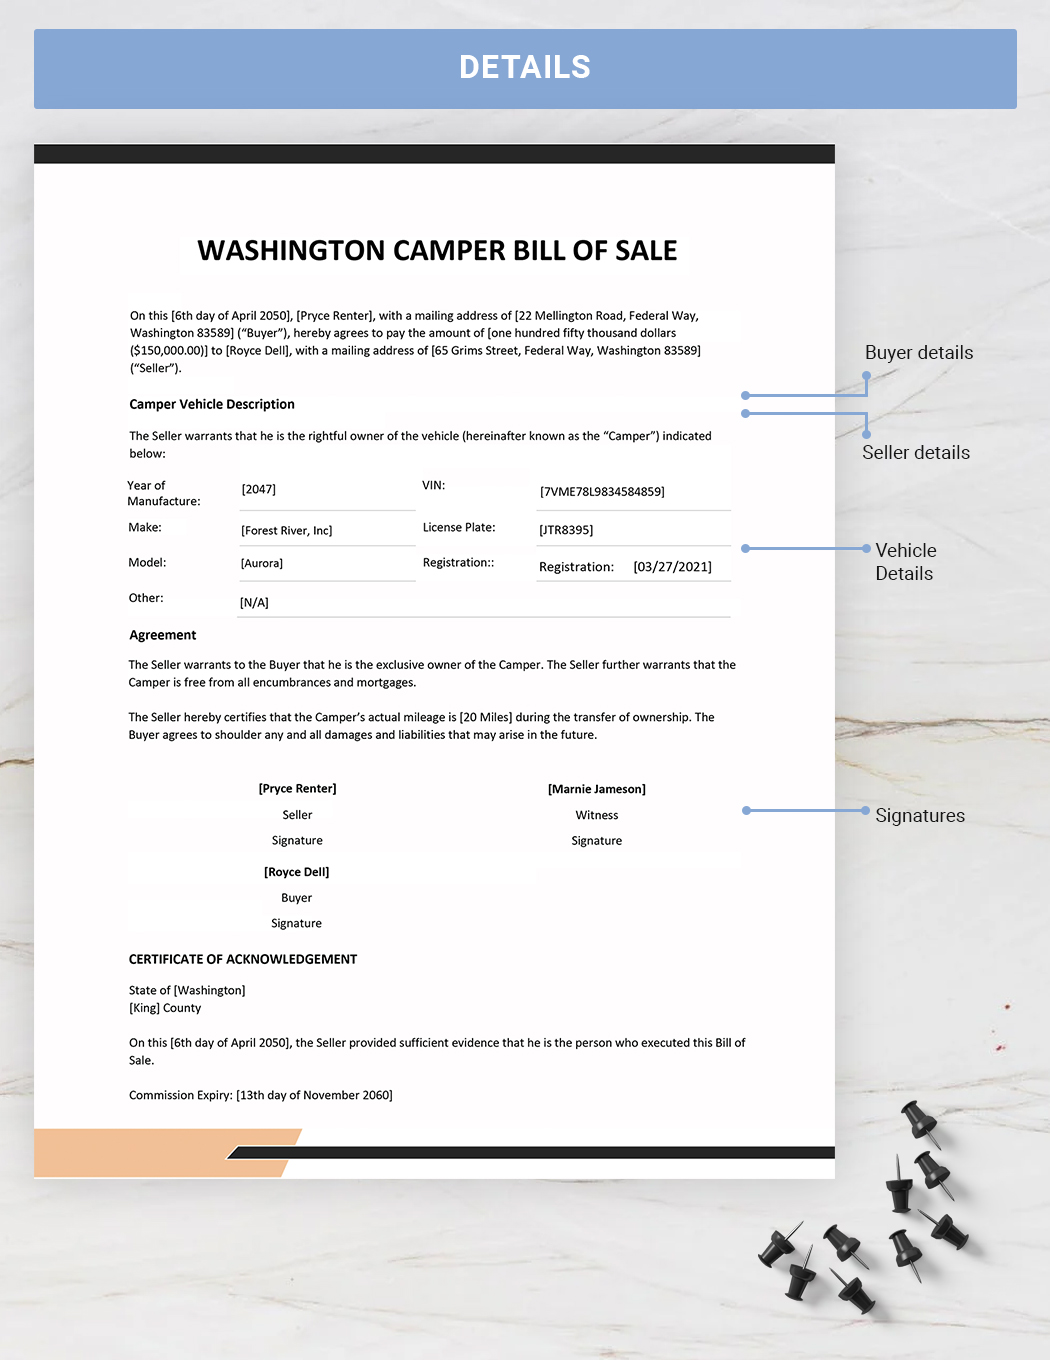 Washington Camper Bill of Sale Template